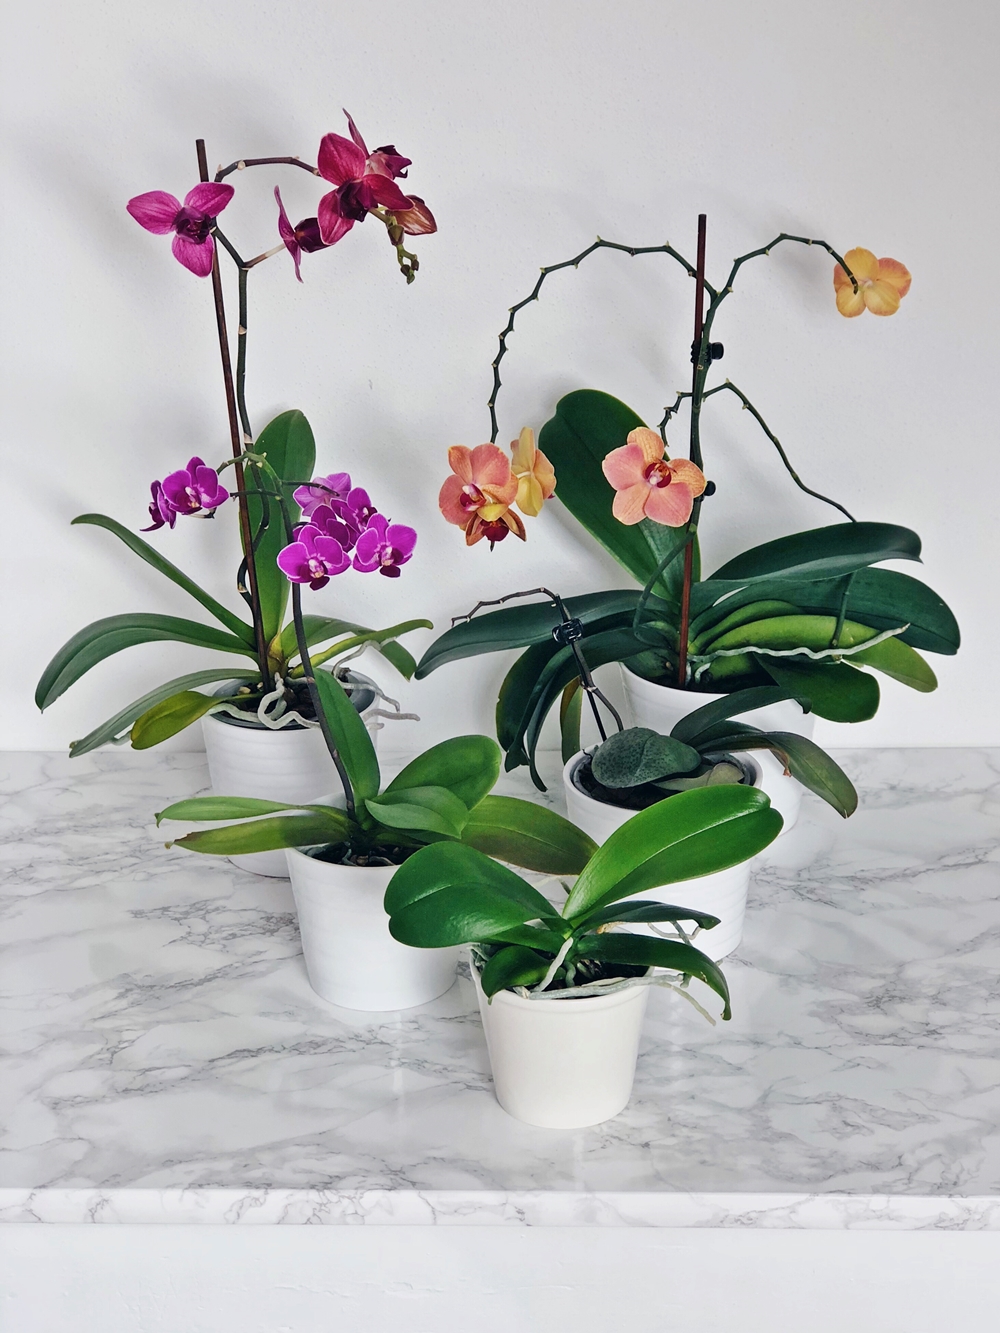 Viele luftwurzeln bei orchideen